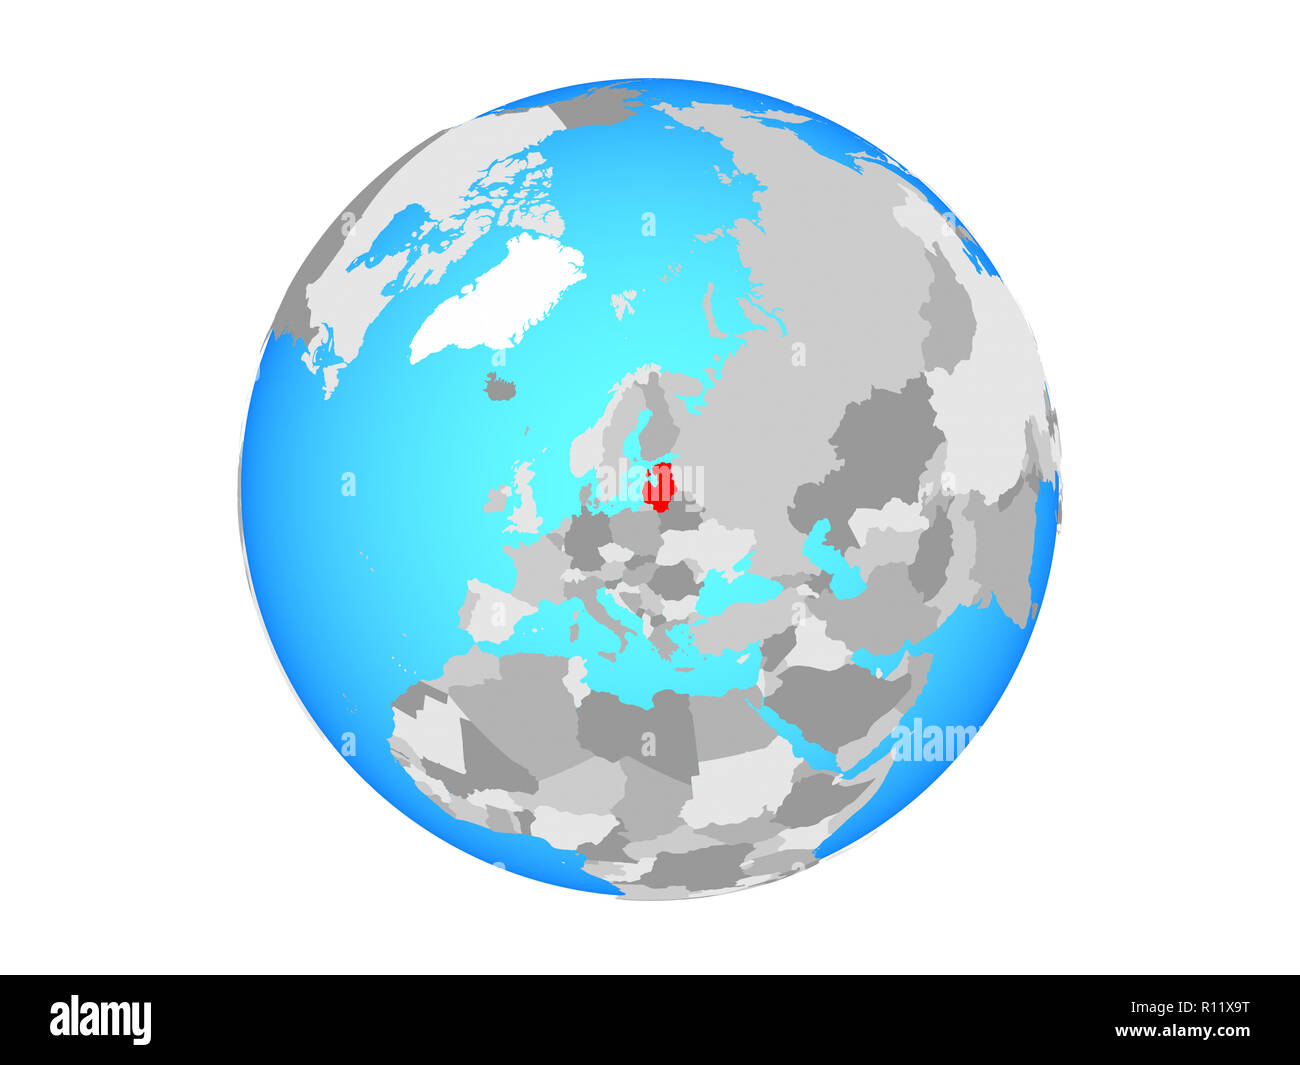 Baltic States on blue political globe. 3D illustration isolated on white background. Stock Photo